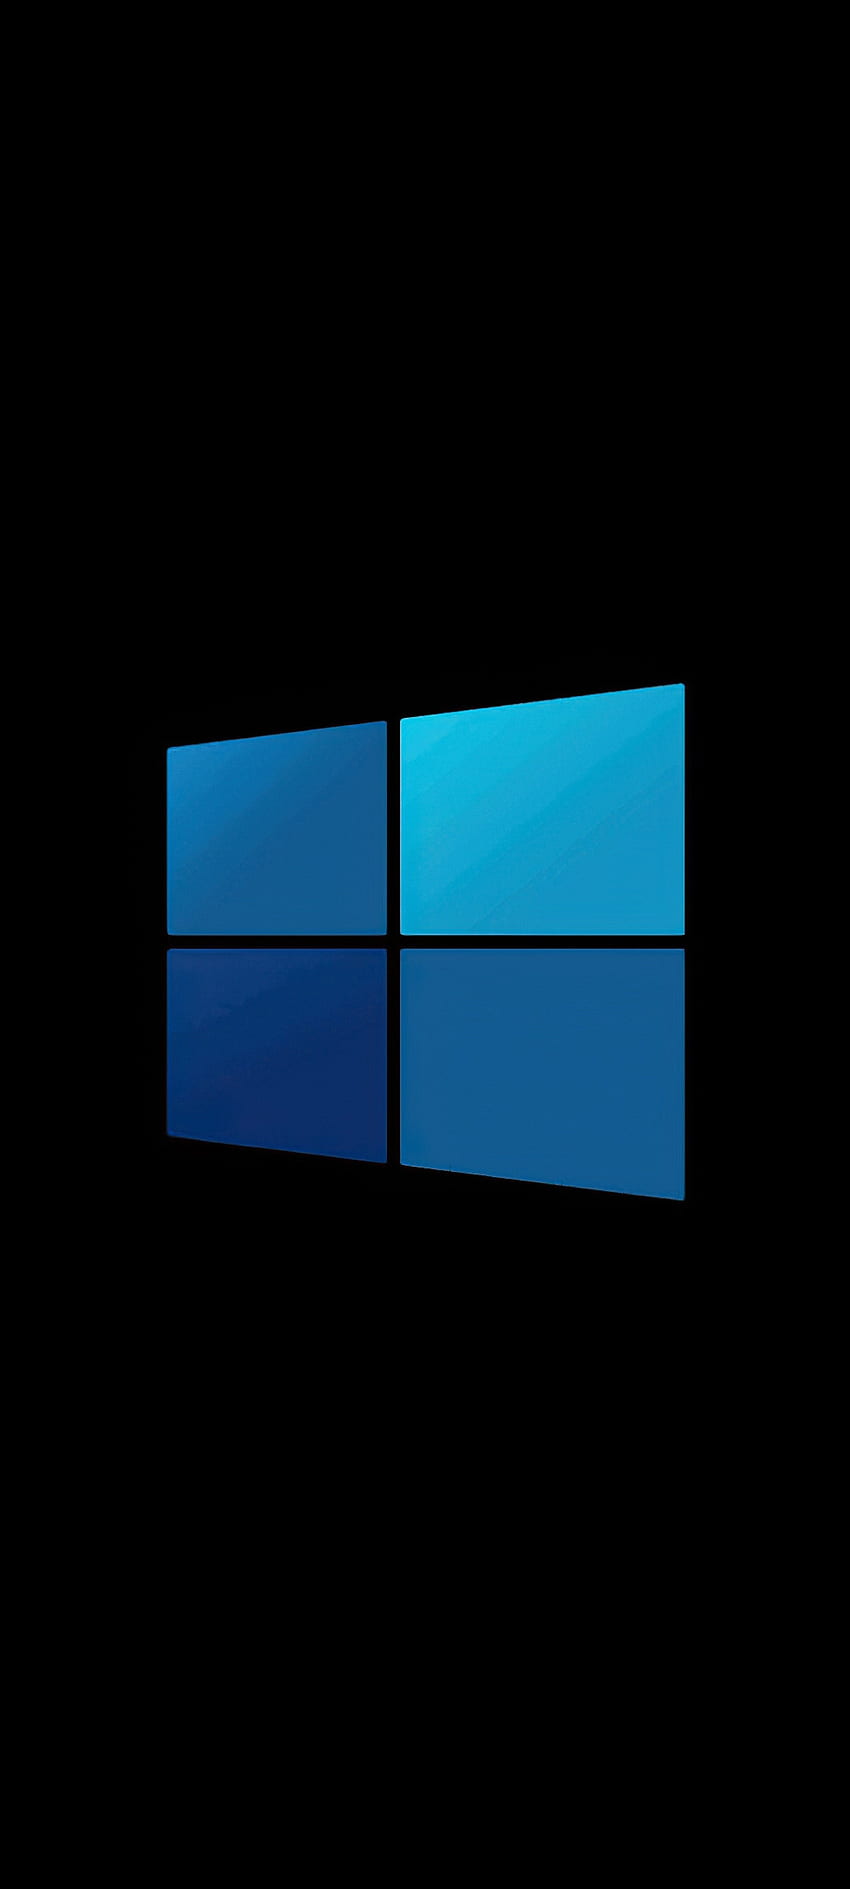 Windows Blue Logo , azul elétrico, amoled, design, preto, oled, tecnologia, , microsoft Papel de parede de celular HD